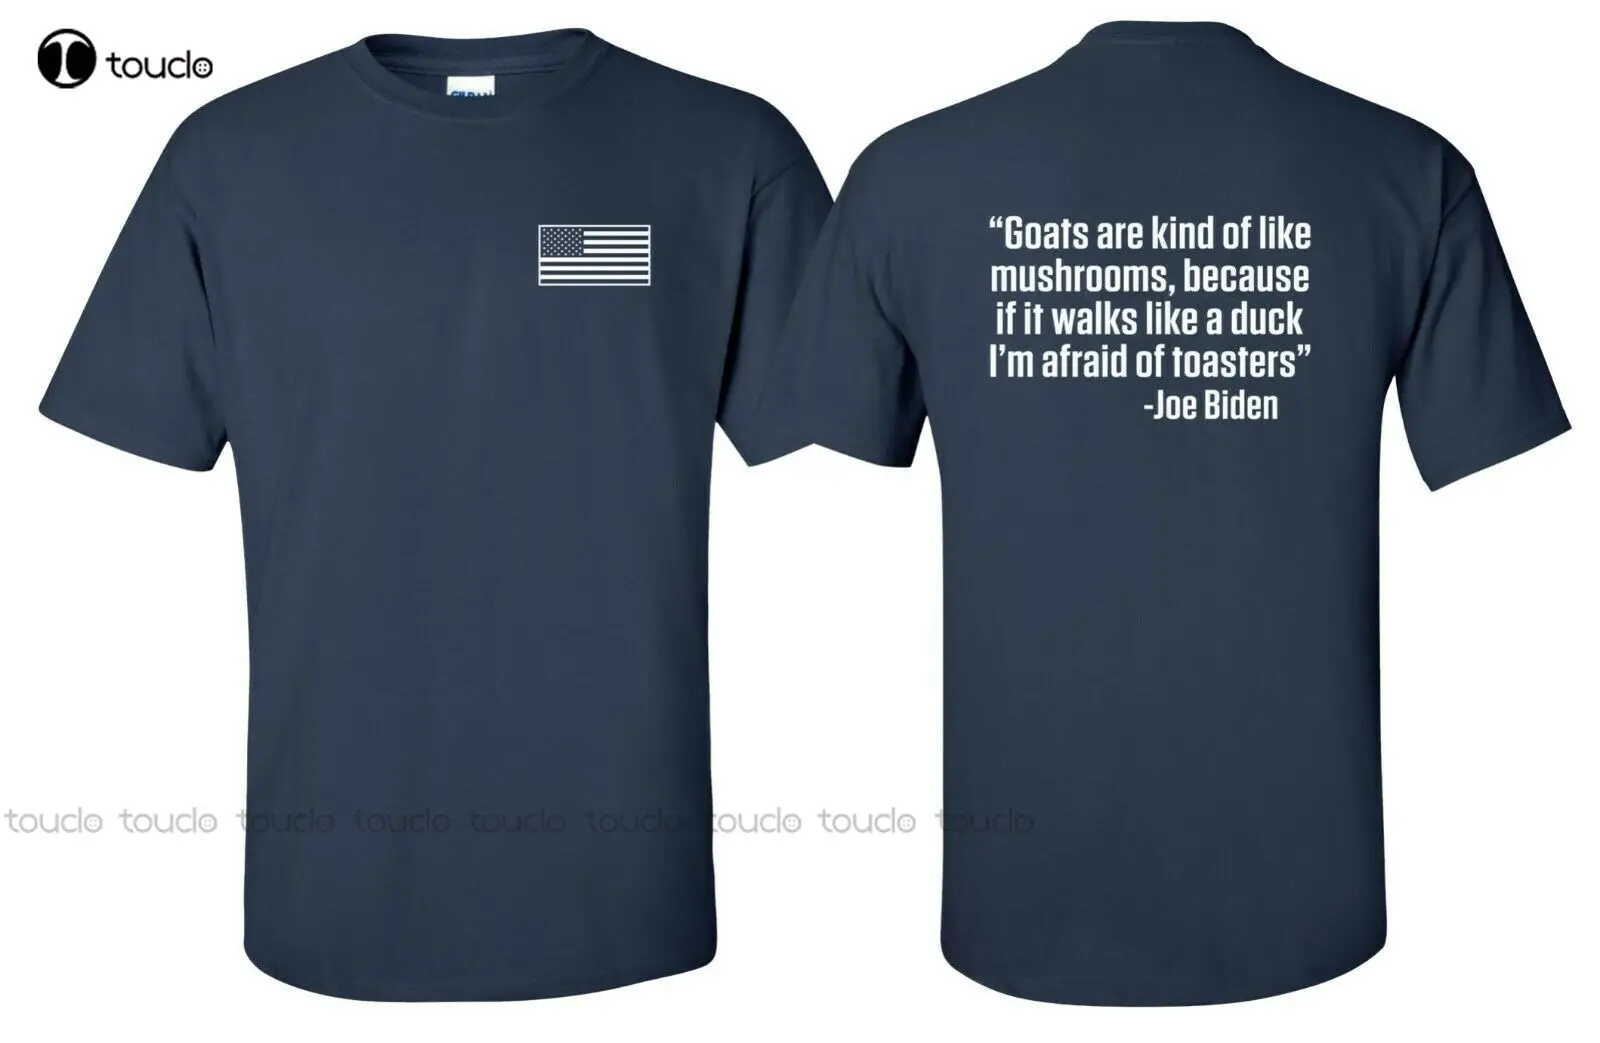 

Joe Biden Quote T-Shirt Funny Gift Anti Pro Trump President Election Sucks Humor White Tshirts For Mens Cotton Fashion Funny New